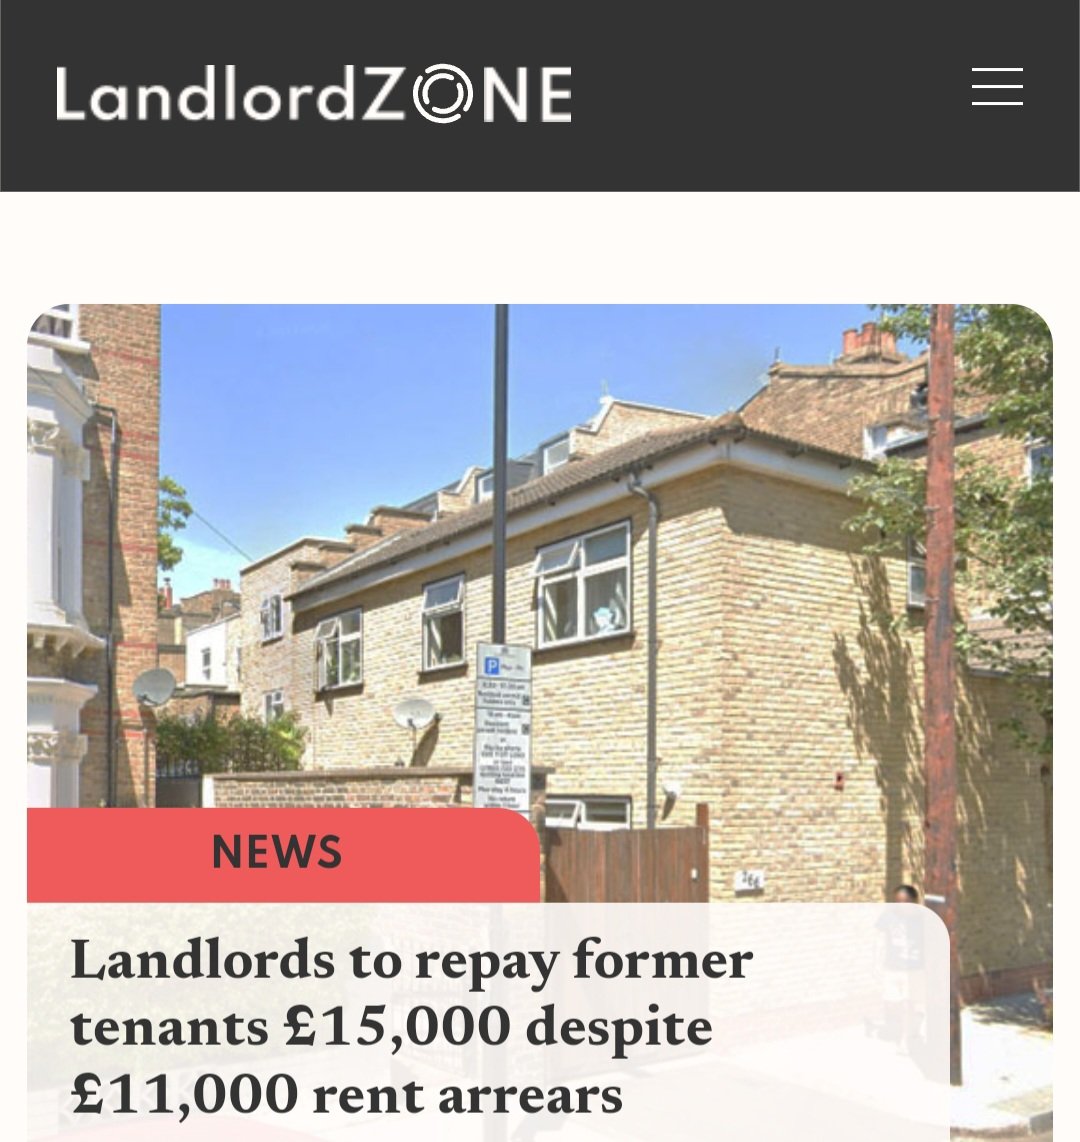 Landlords to repay former tenants £15,000 despite £11,000 rent arrears. #Housing #Landlord #Landlords #Fine #CourtReports #BeAGoodLandlord #BeAGoodLandlordNOTaBADLandlord landlordzone.co.uk/news/landlords…